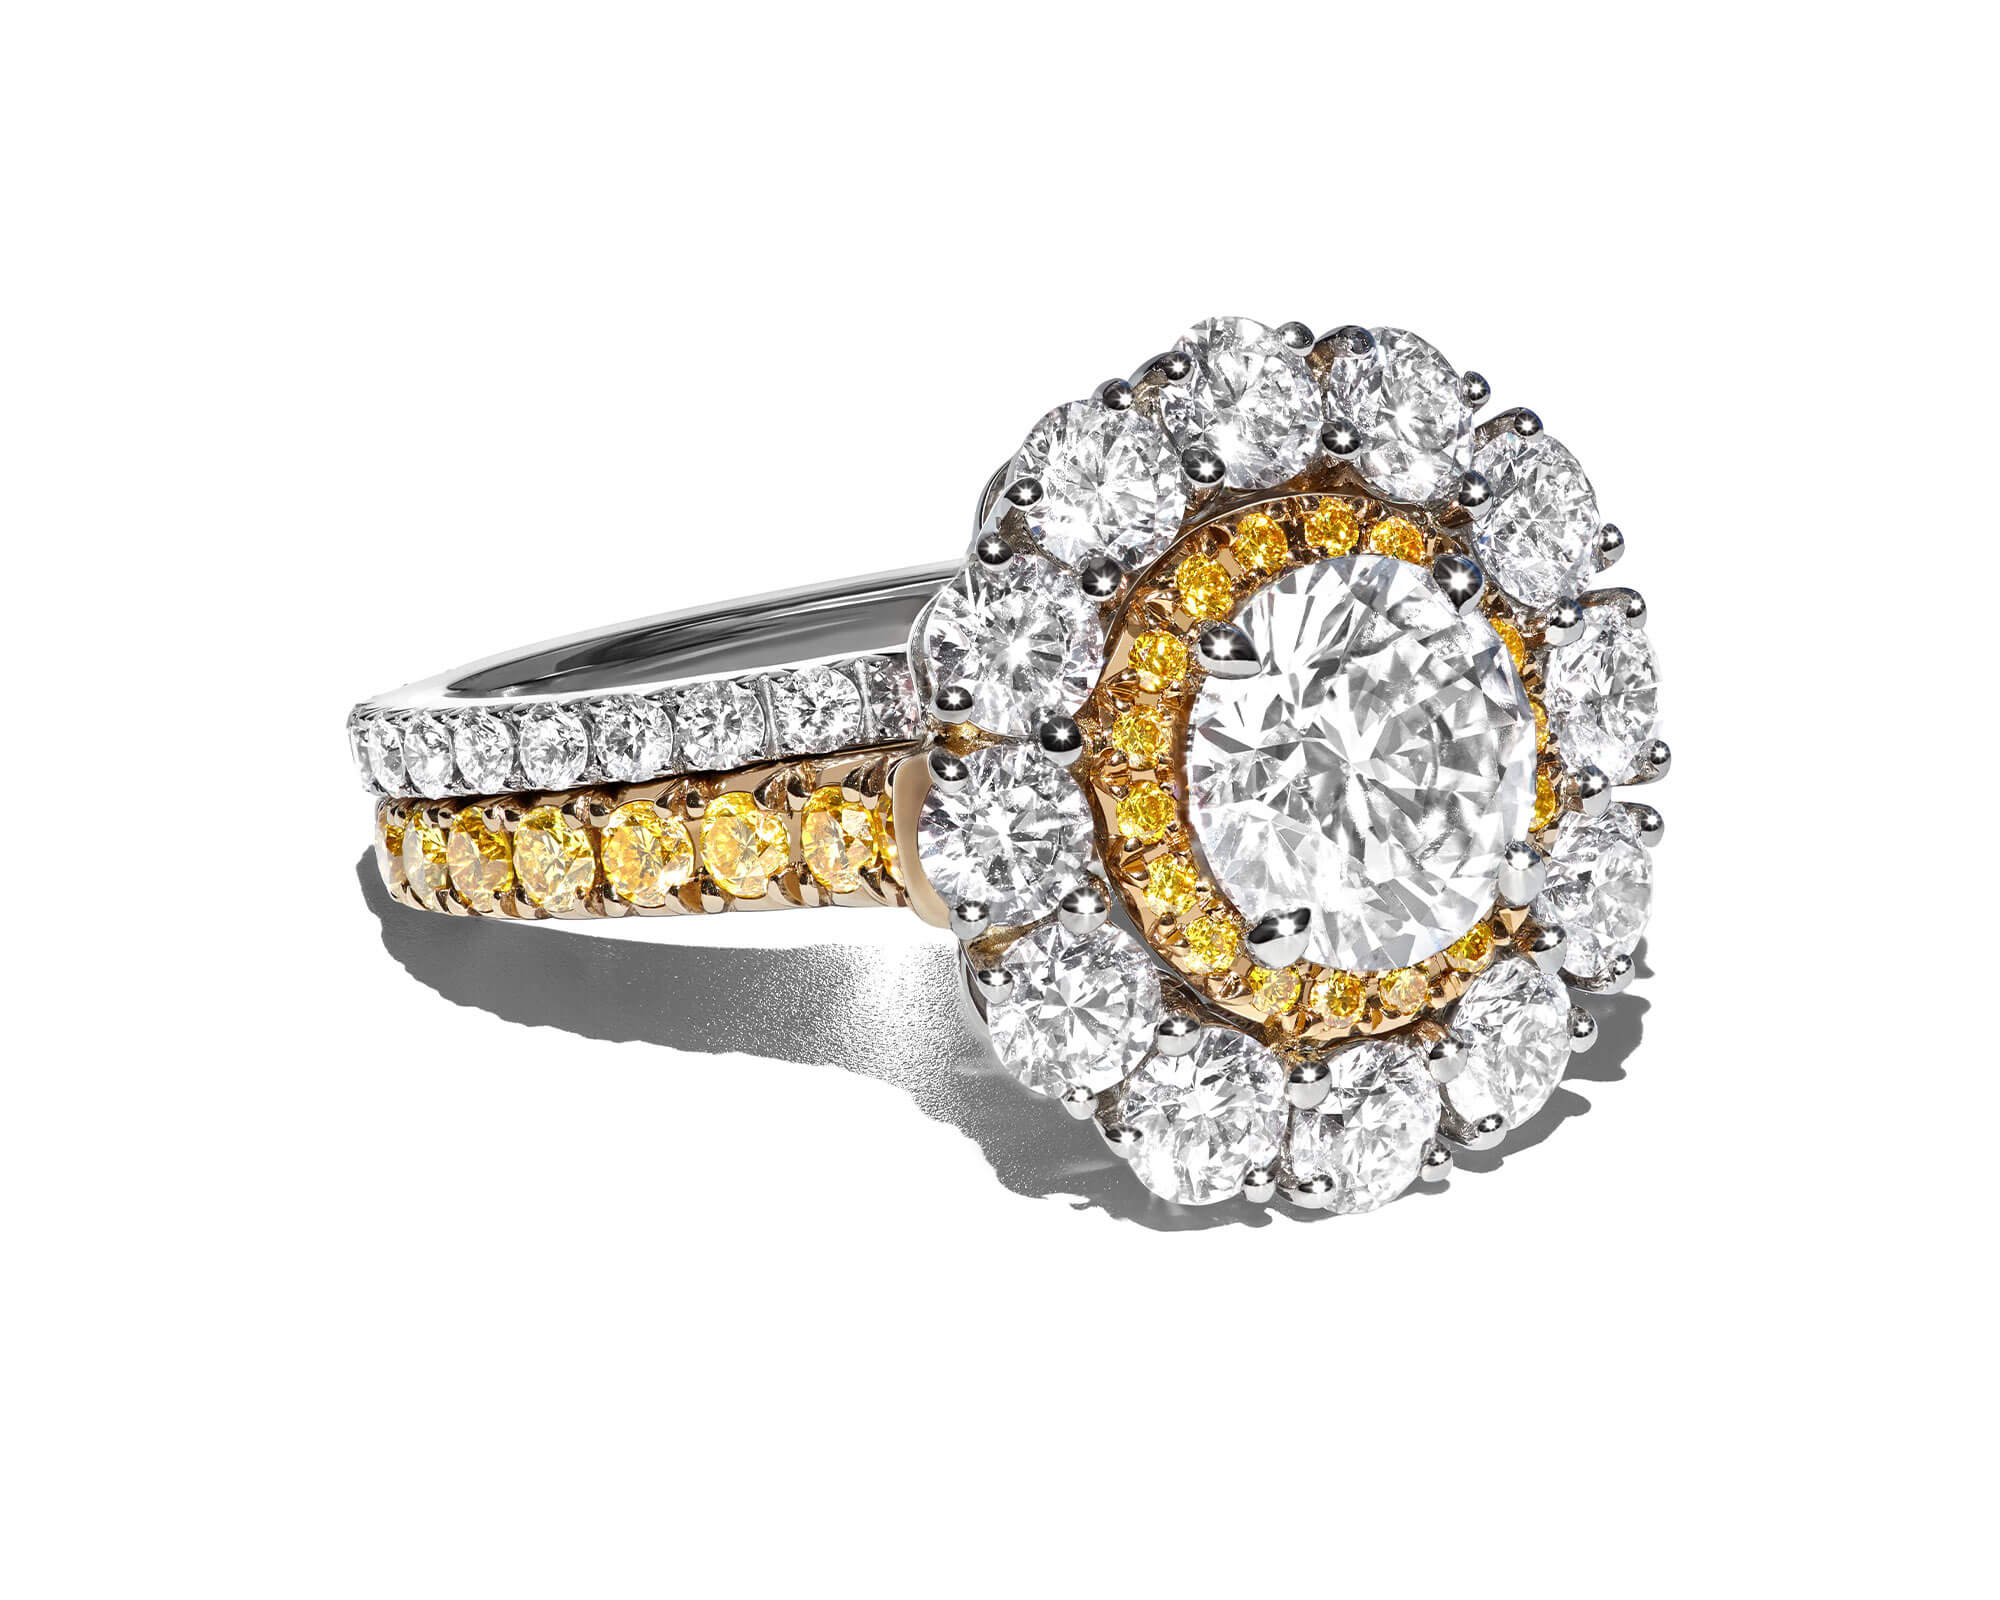 Garrard Harmoney yellow and white diamond engagement ring with diamond wedding band